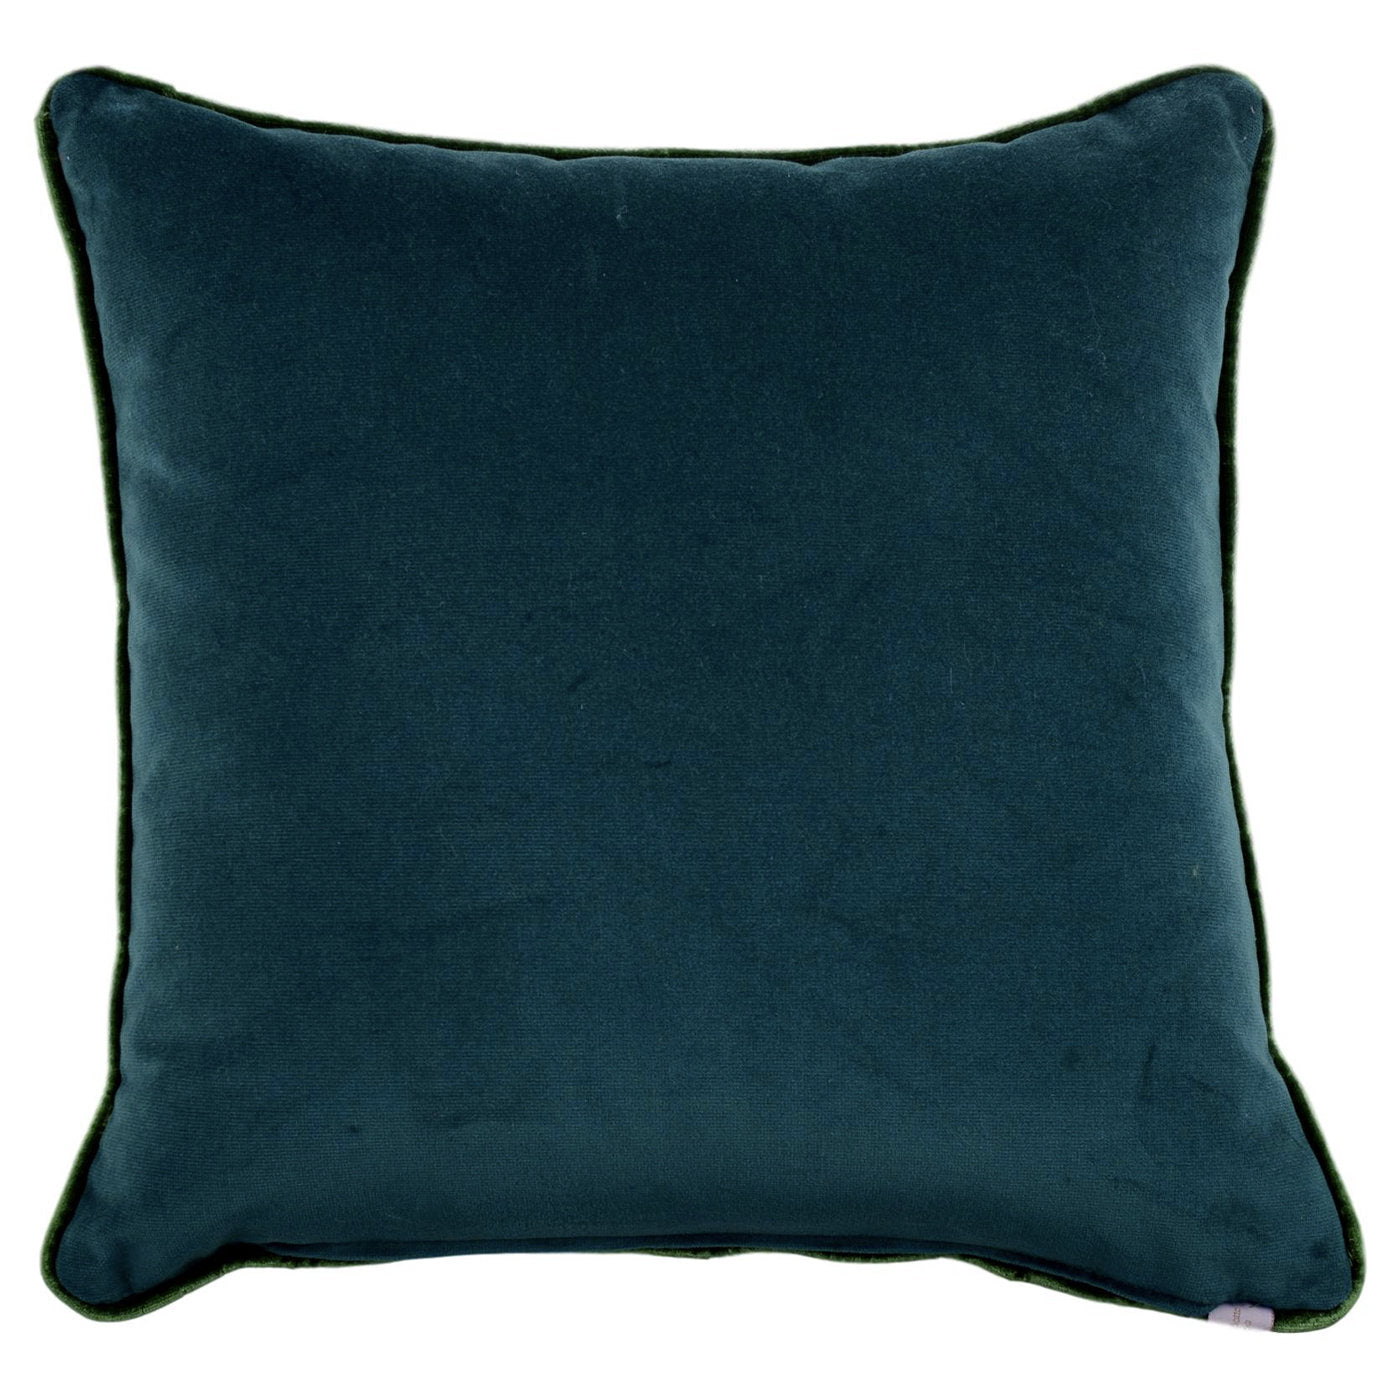 Emerald Carré Cushion in jacquard fabric - Alternative view 1